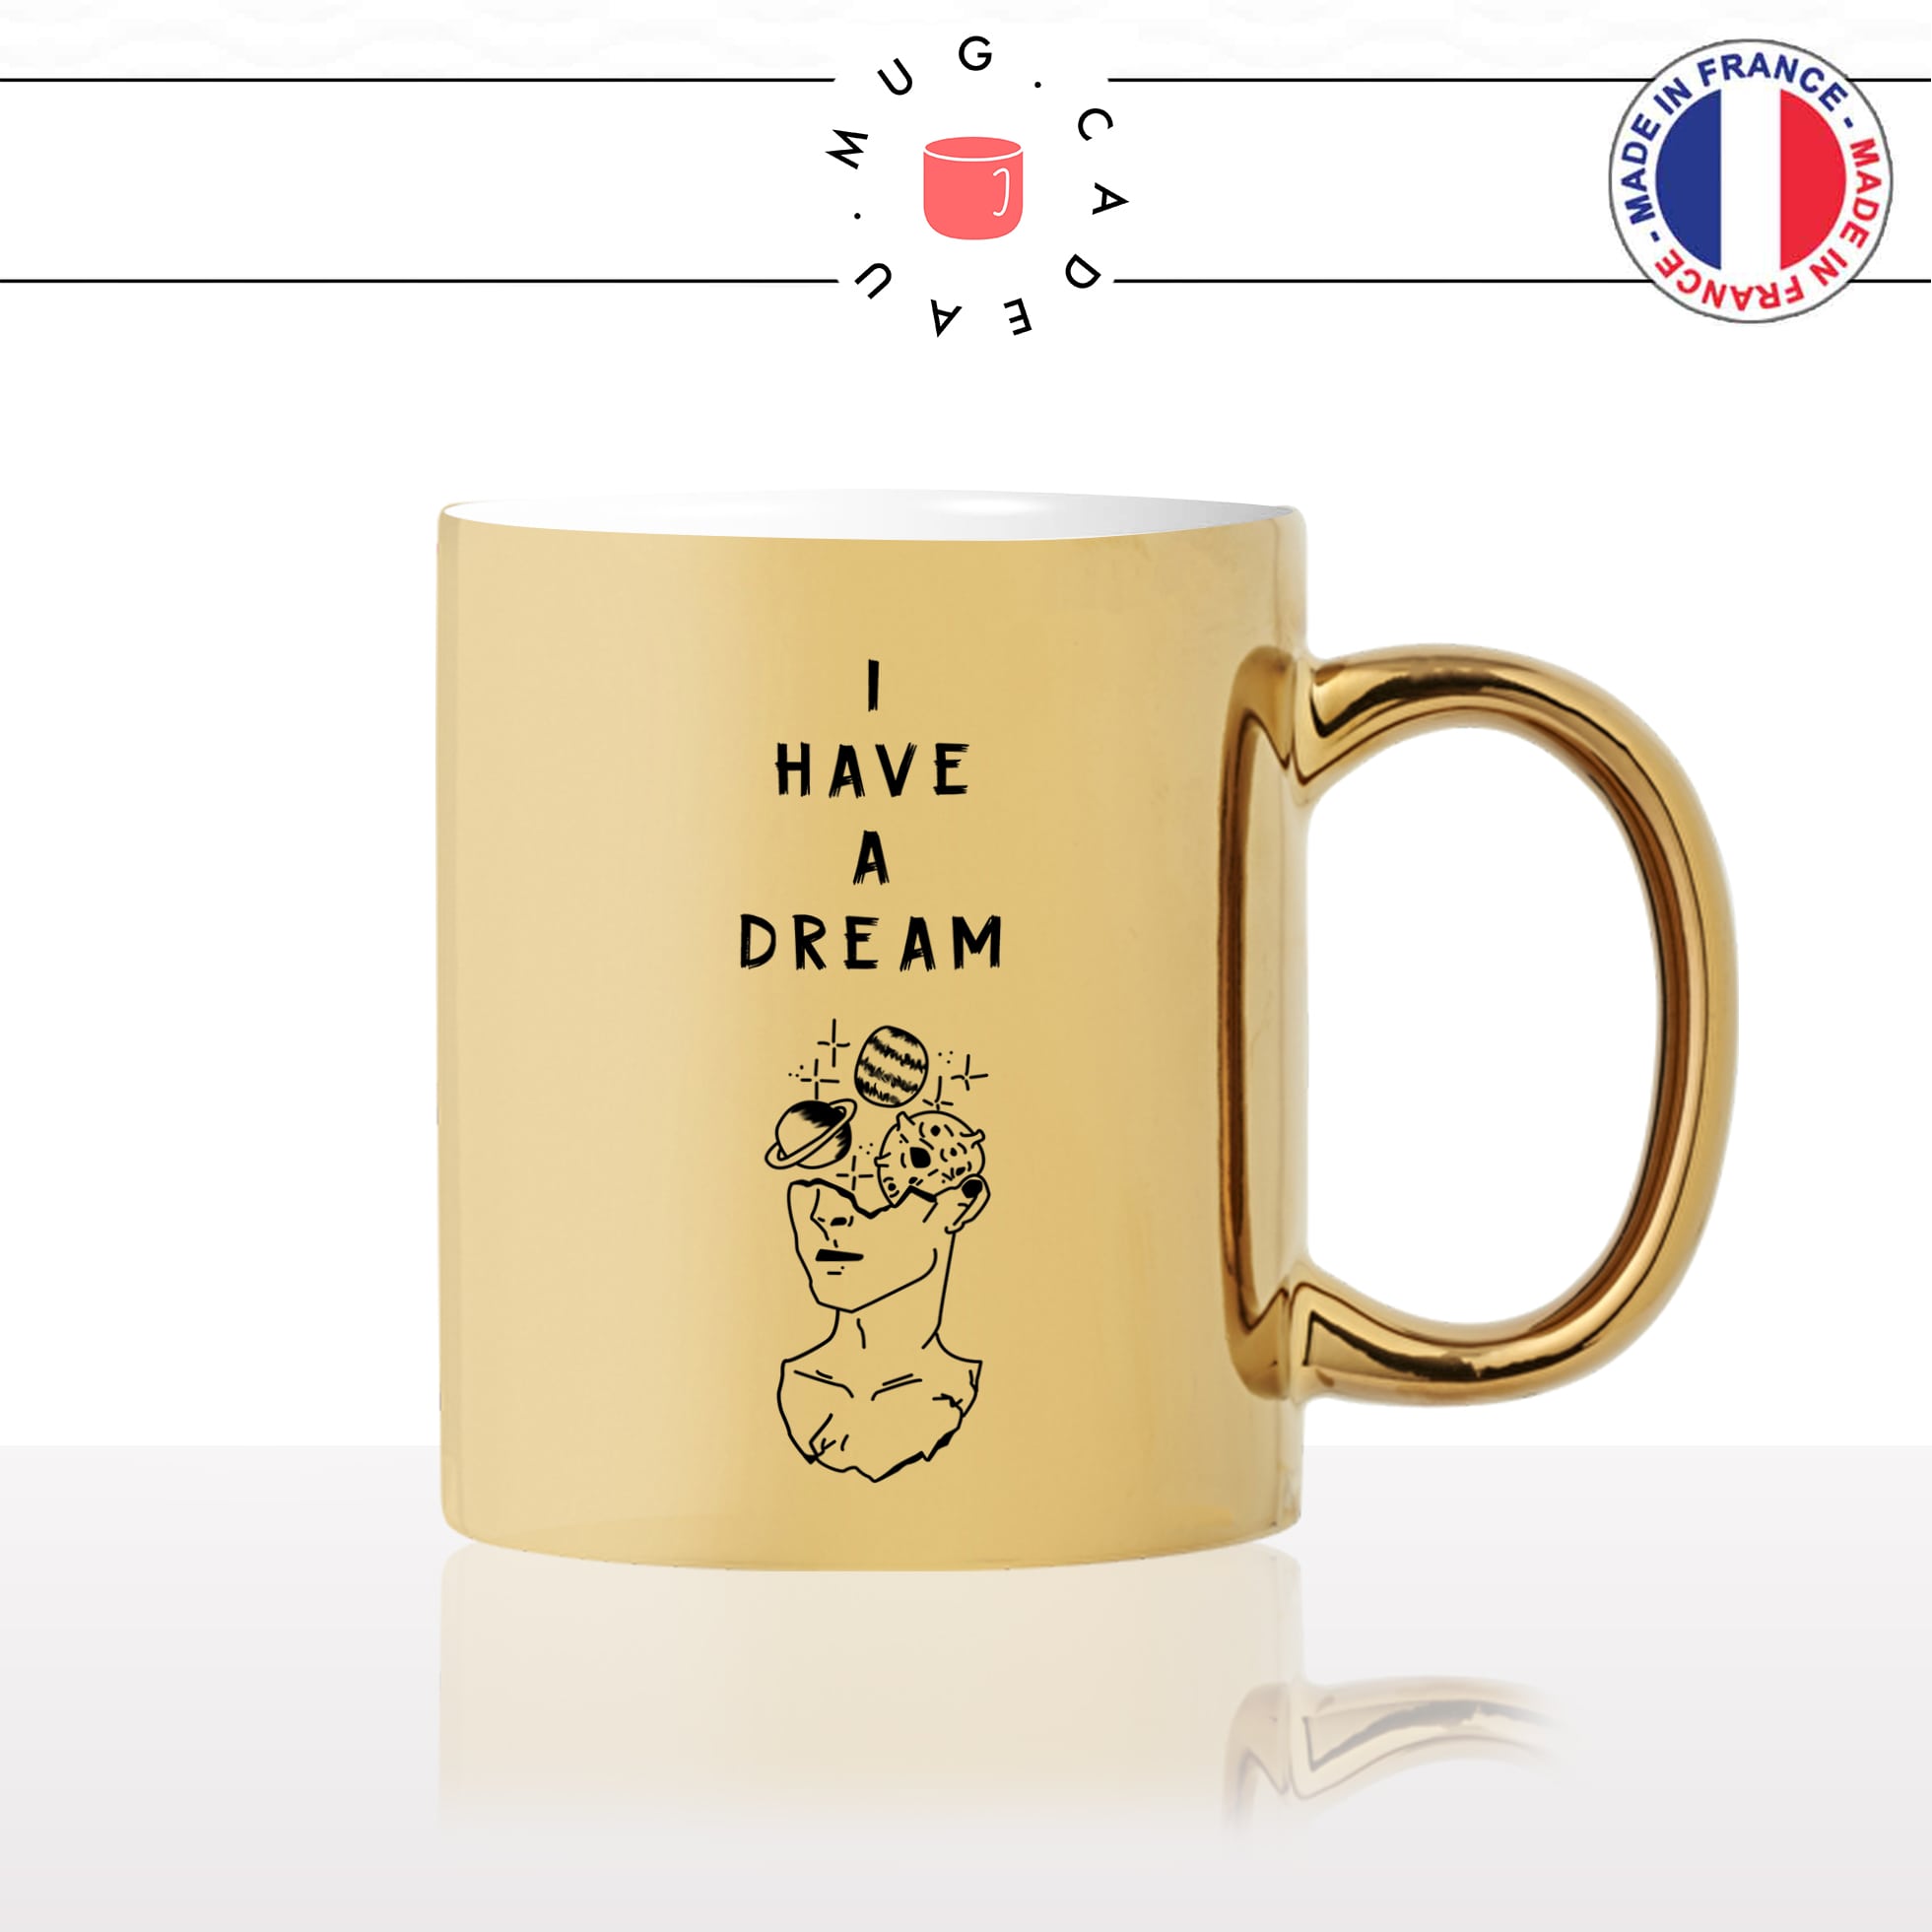 mug-tasse-or-doré-gold-espace-planete-i-have-a-dream-obama-nasa-saturne-elon-musc-cool-idée-cadeau-drole-original-fun-café-thé-personnalisé2-min